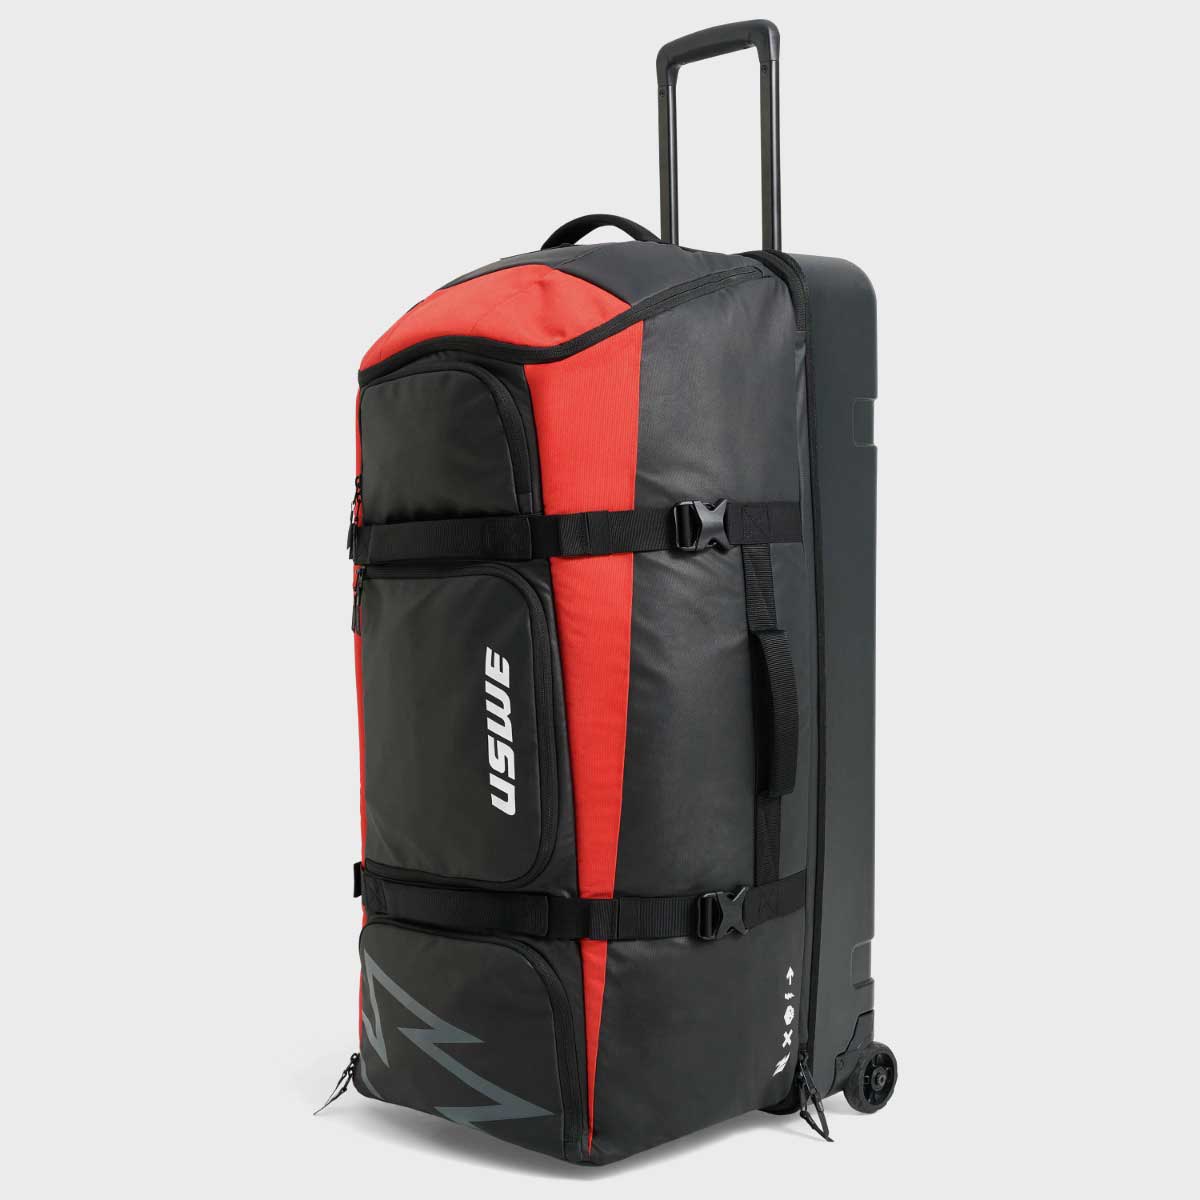 Oxygen Suitcase - EMERAIR'S TROLLEY - Elite Bags-saigonsouth.com.vn